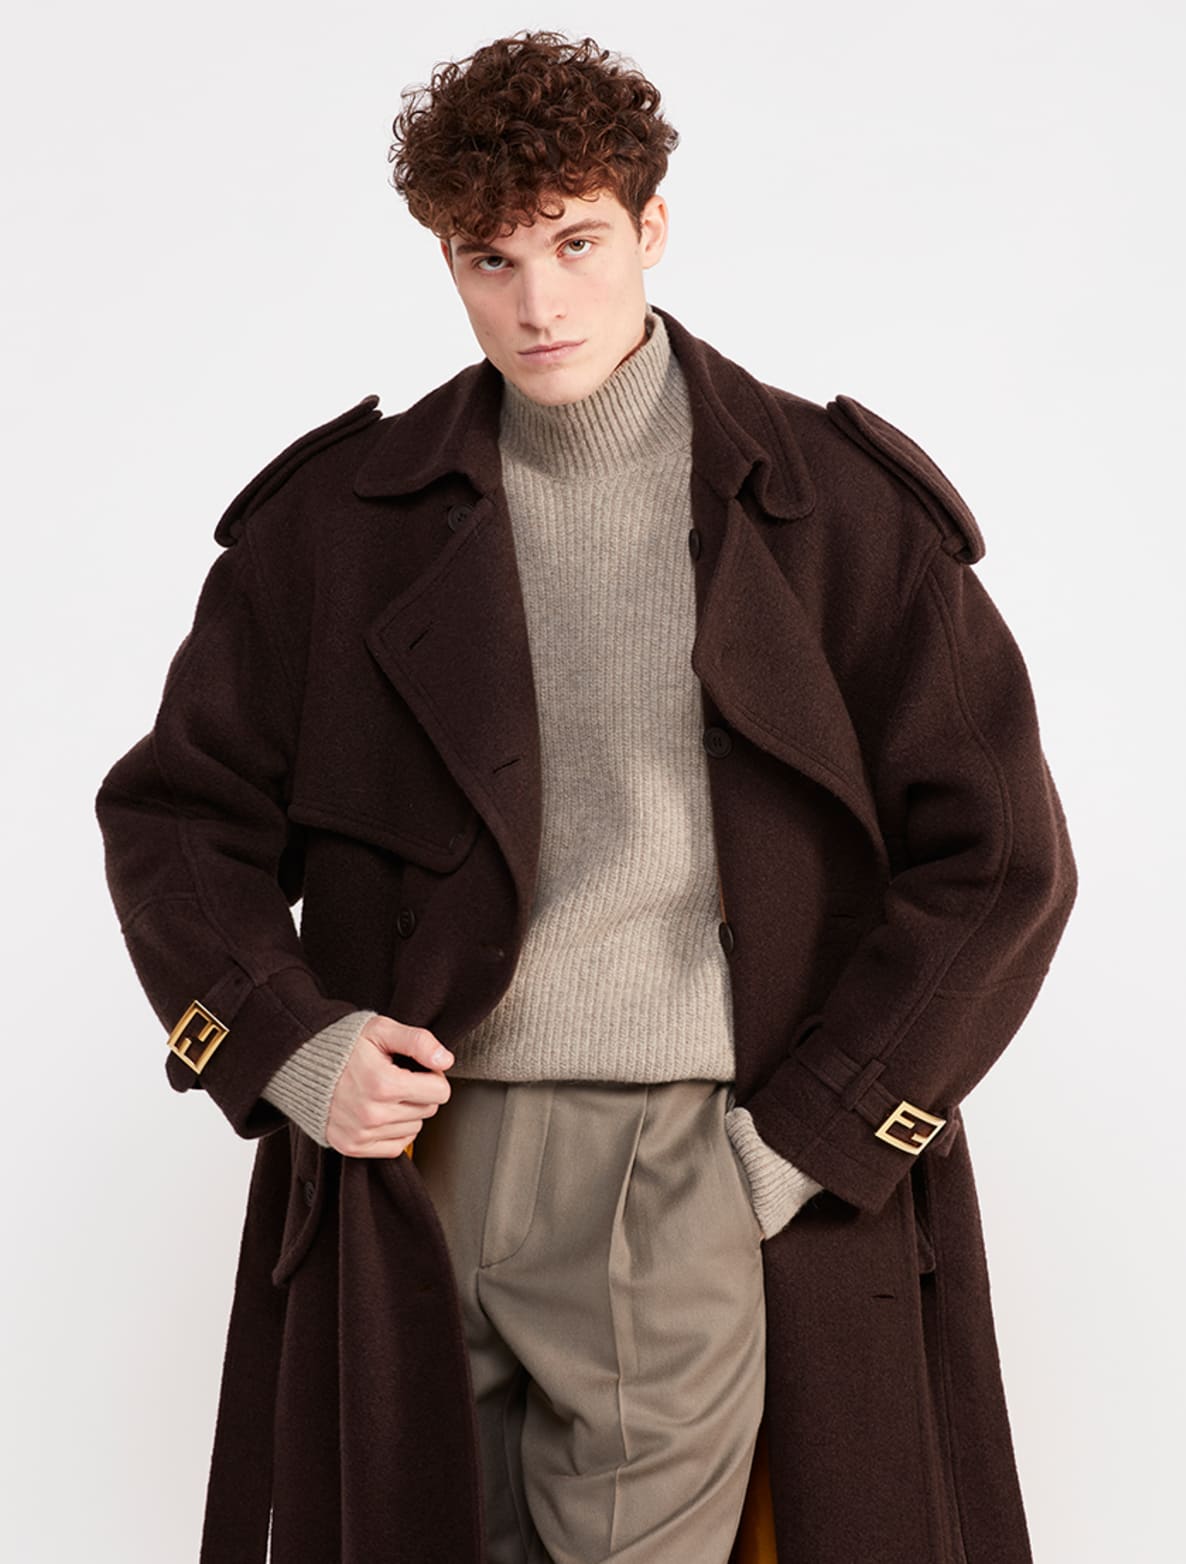 Man in brown wool coat with tan turtleneck and beige slacks